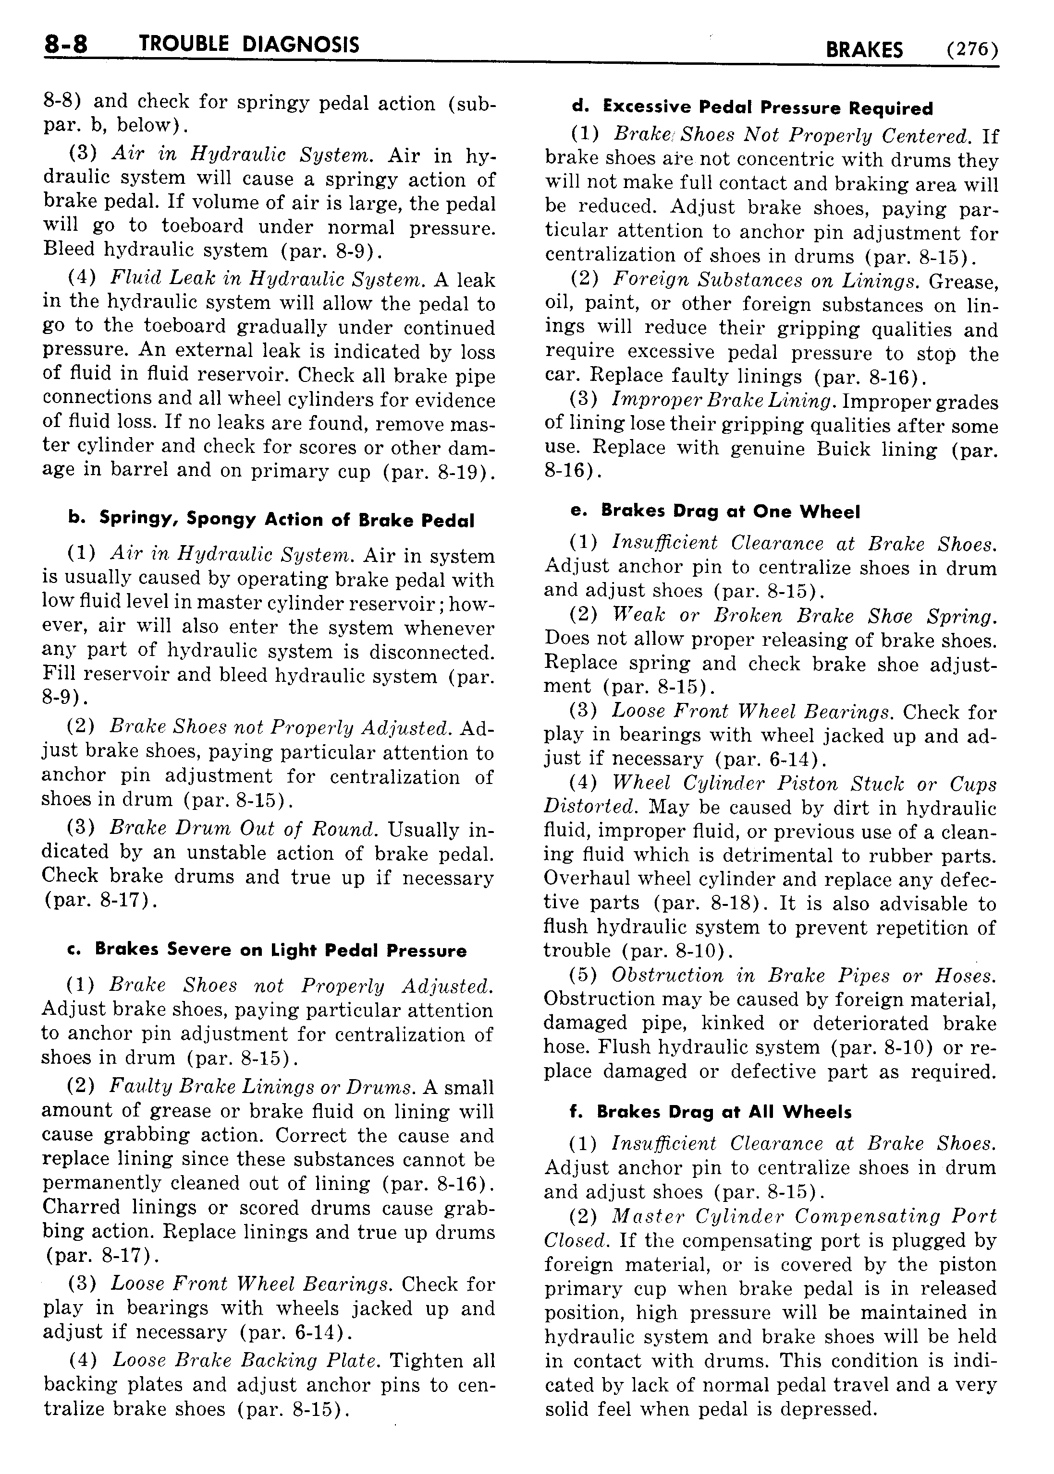 n_09 1951 Buick Shop Manual - Brakes-008-008.jpg